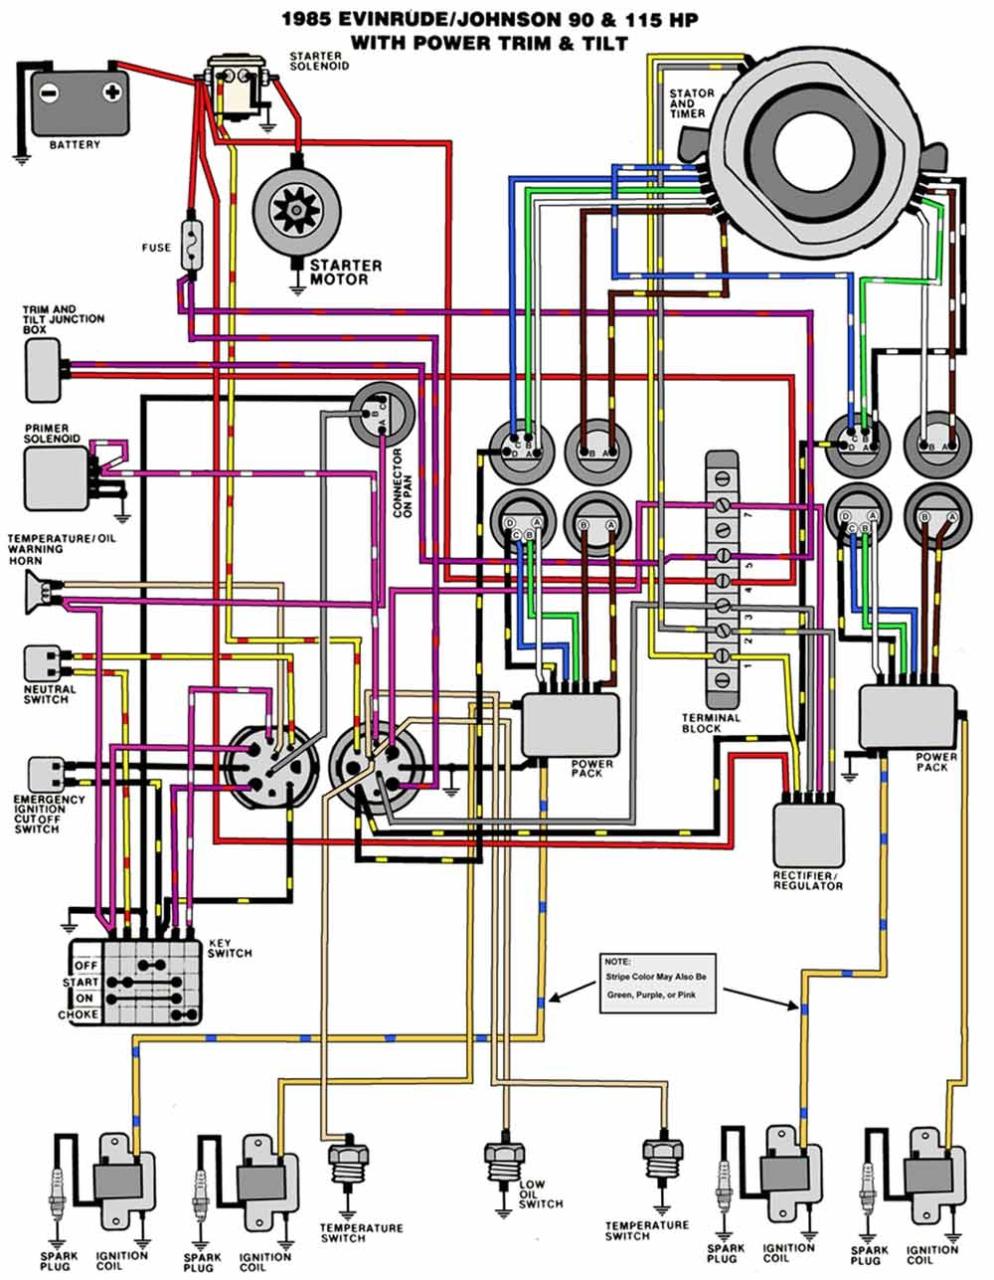 2 Stroke Mercury Outboard Wiring Diagram Schematic